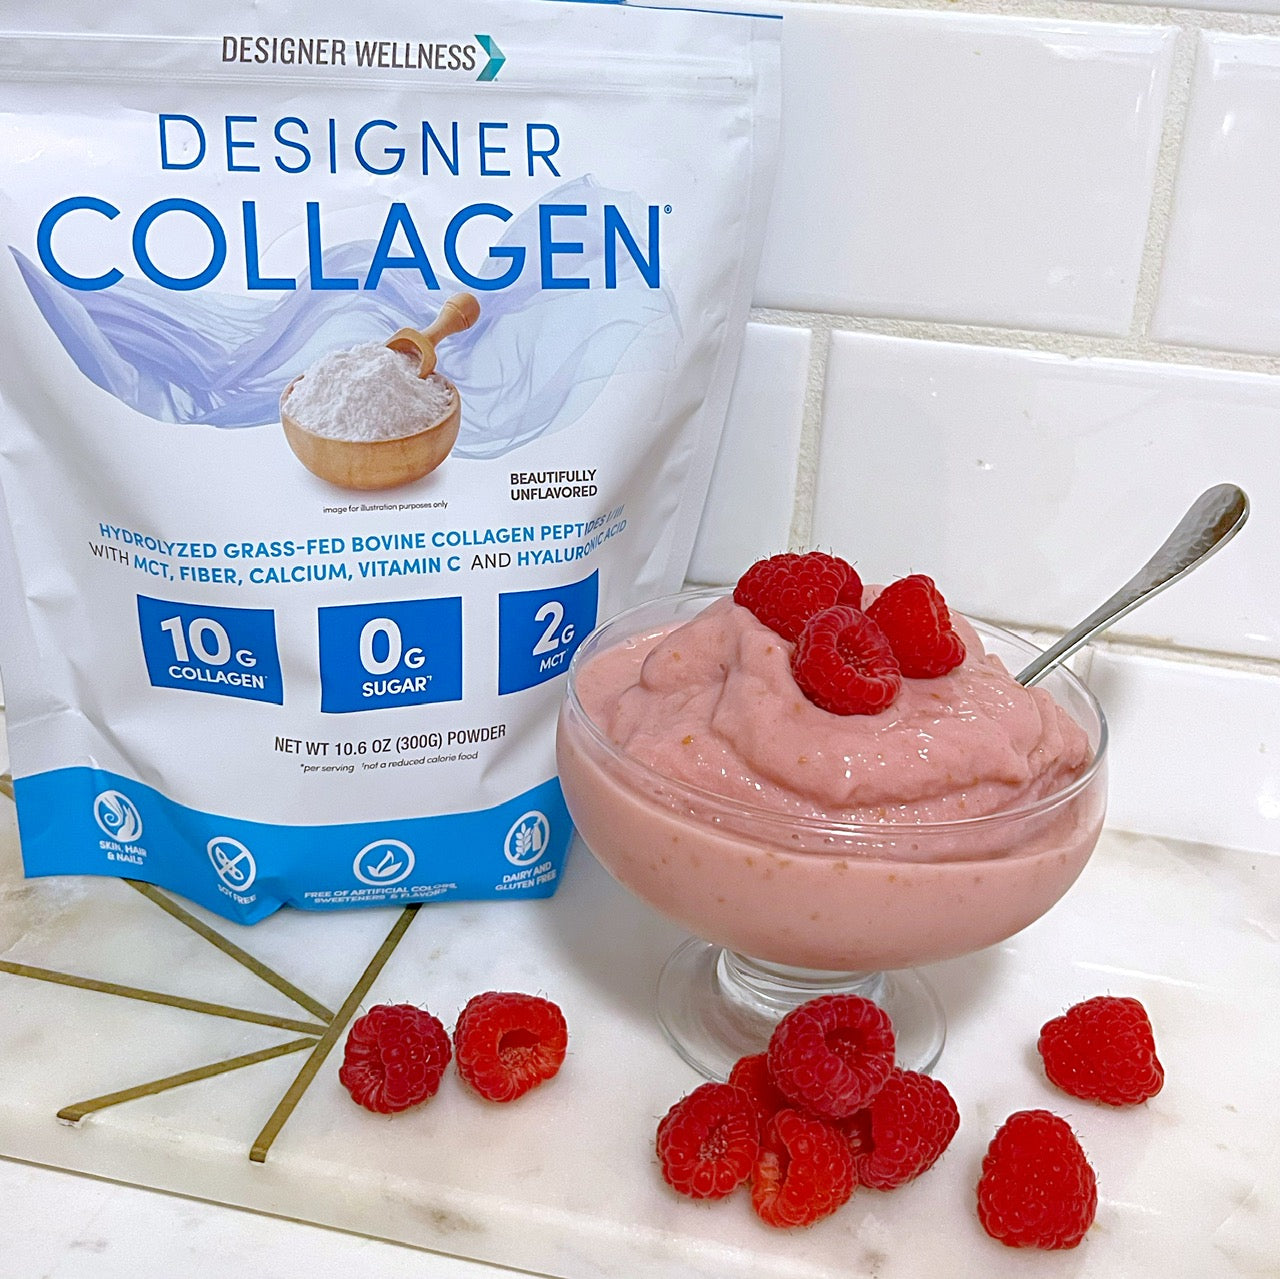 Raspberry Collagen “Nice” Cream